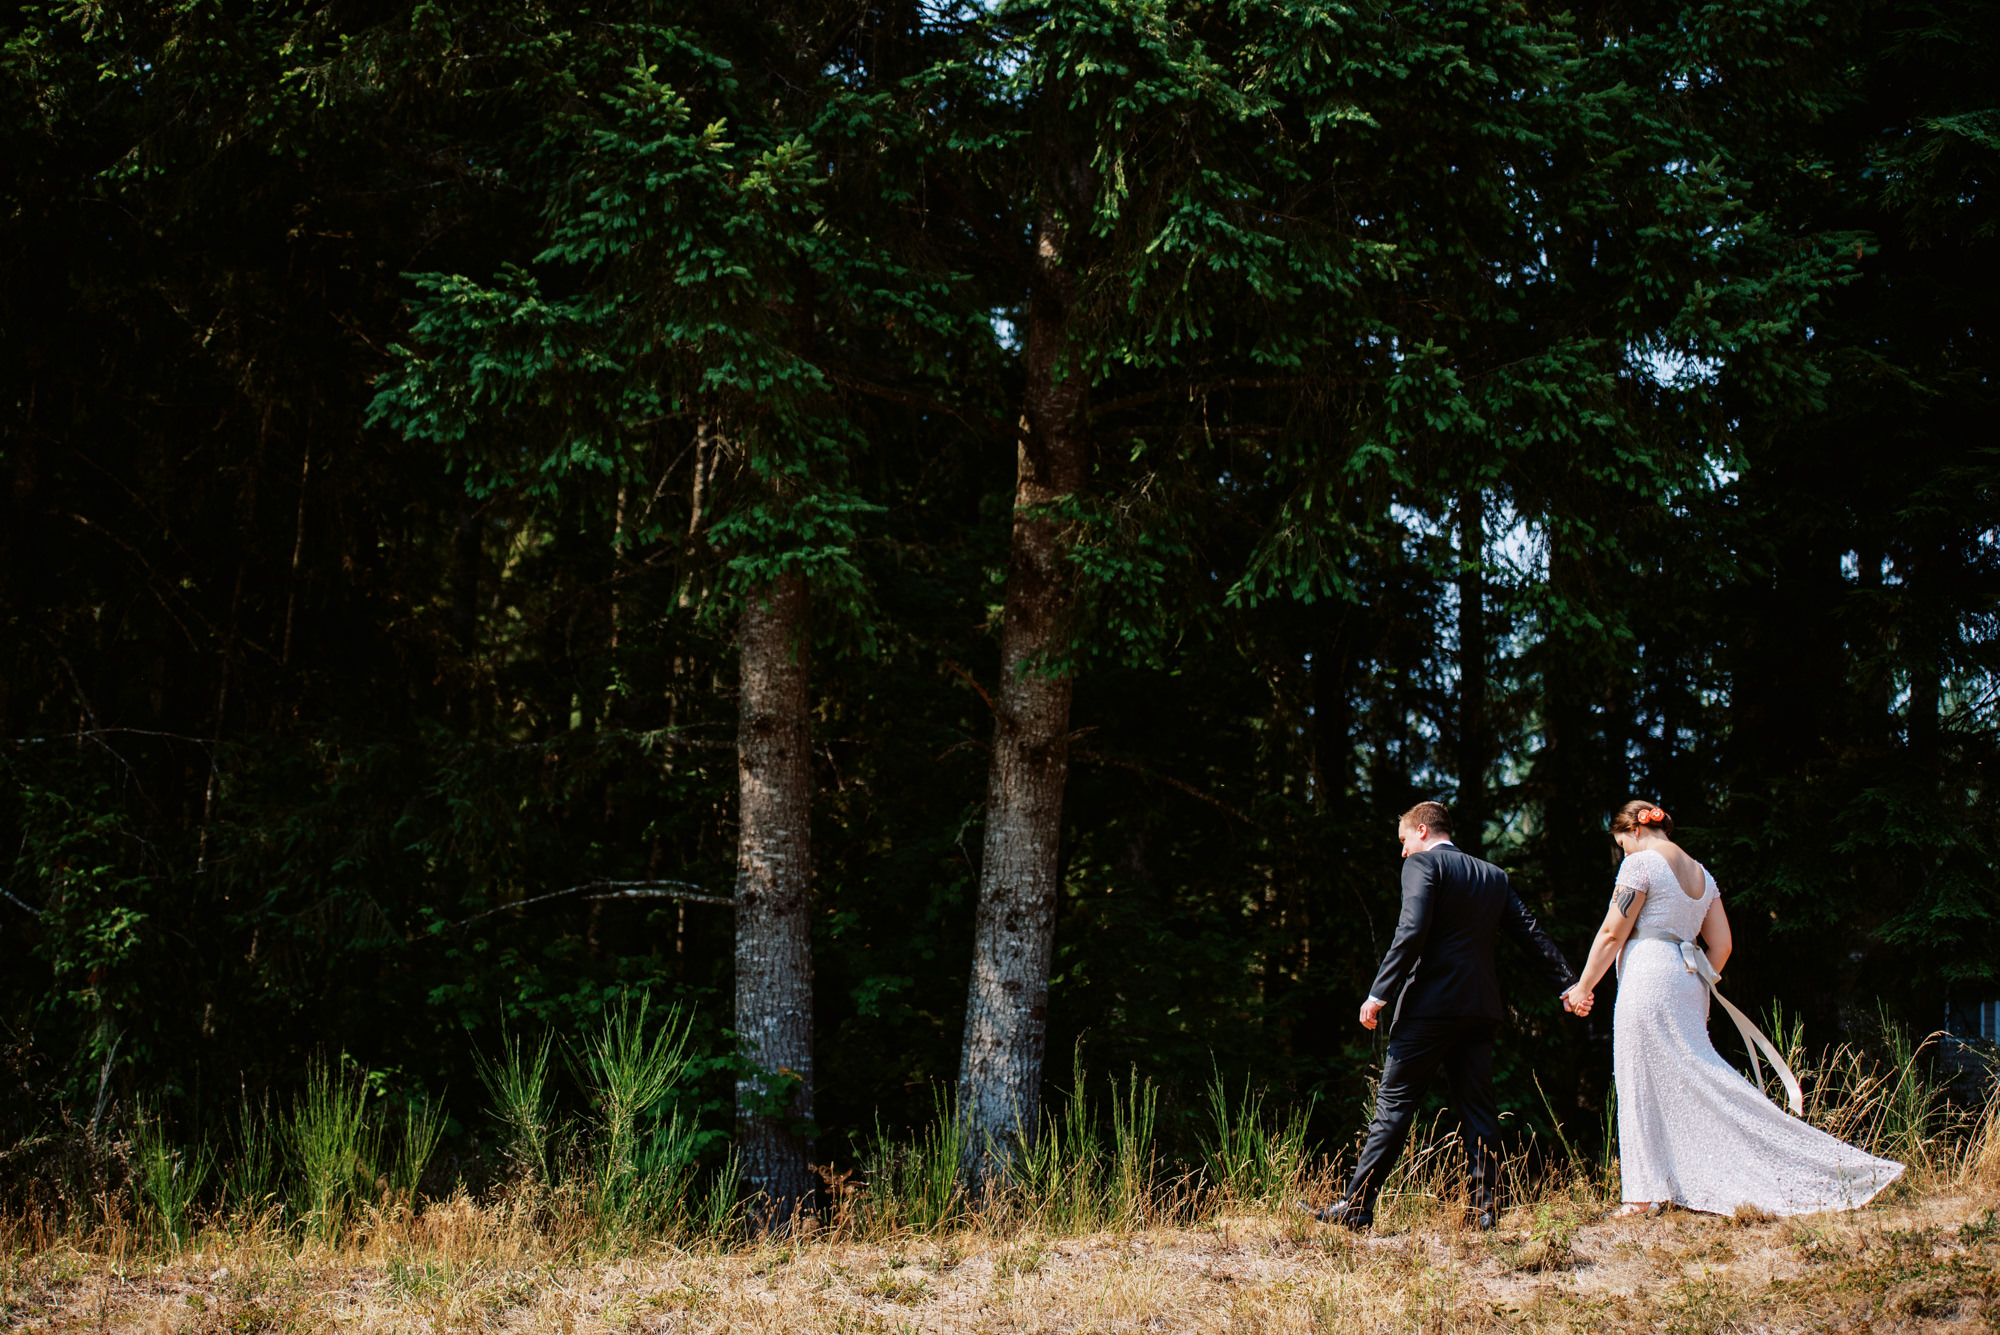 Seattle Backyard Wedding: Hannah and Jacob wedding portraits